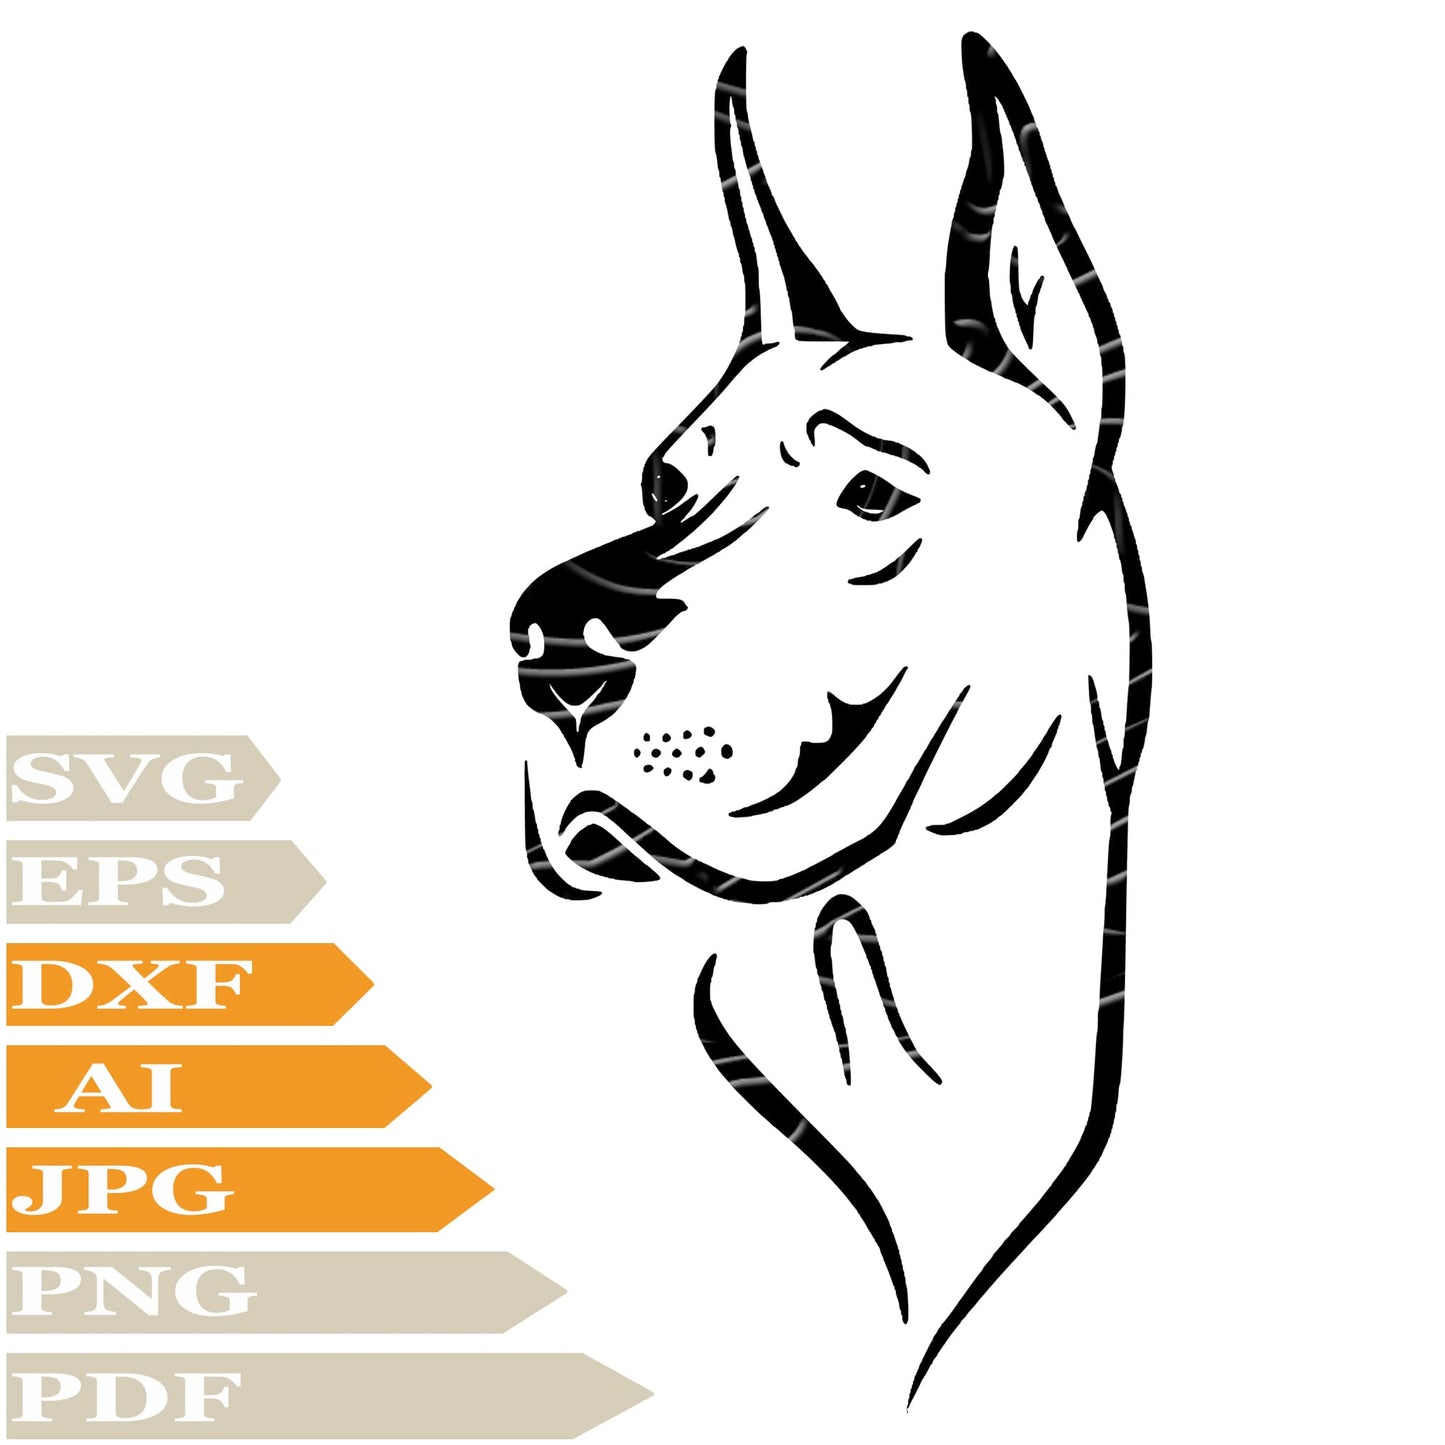 Dog Gret Dane, Gret Dane Head Svg File, Image Cut, Png, For Tattoo, Silhouette, Digital Vector Download, Cut File, Clipart, For Cricut